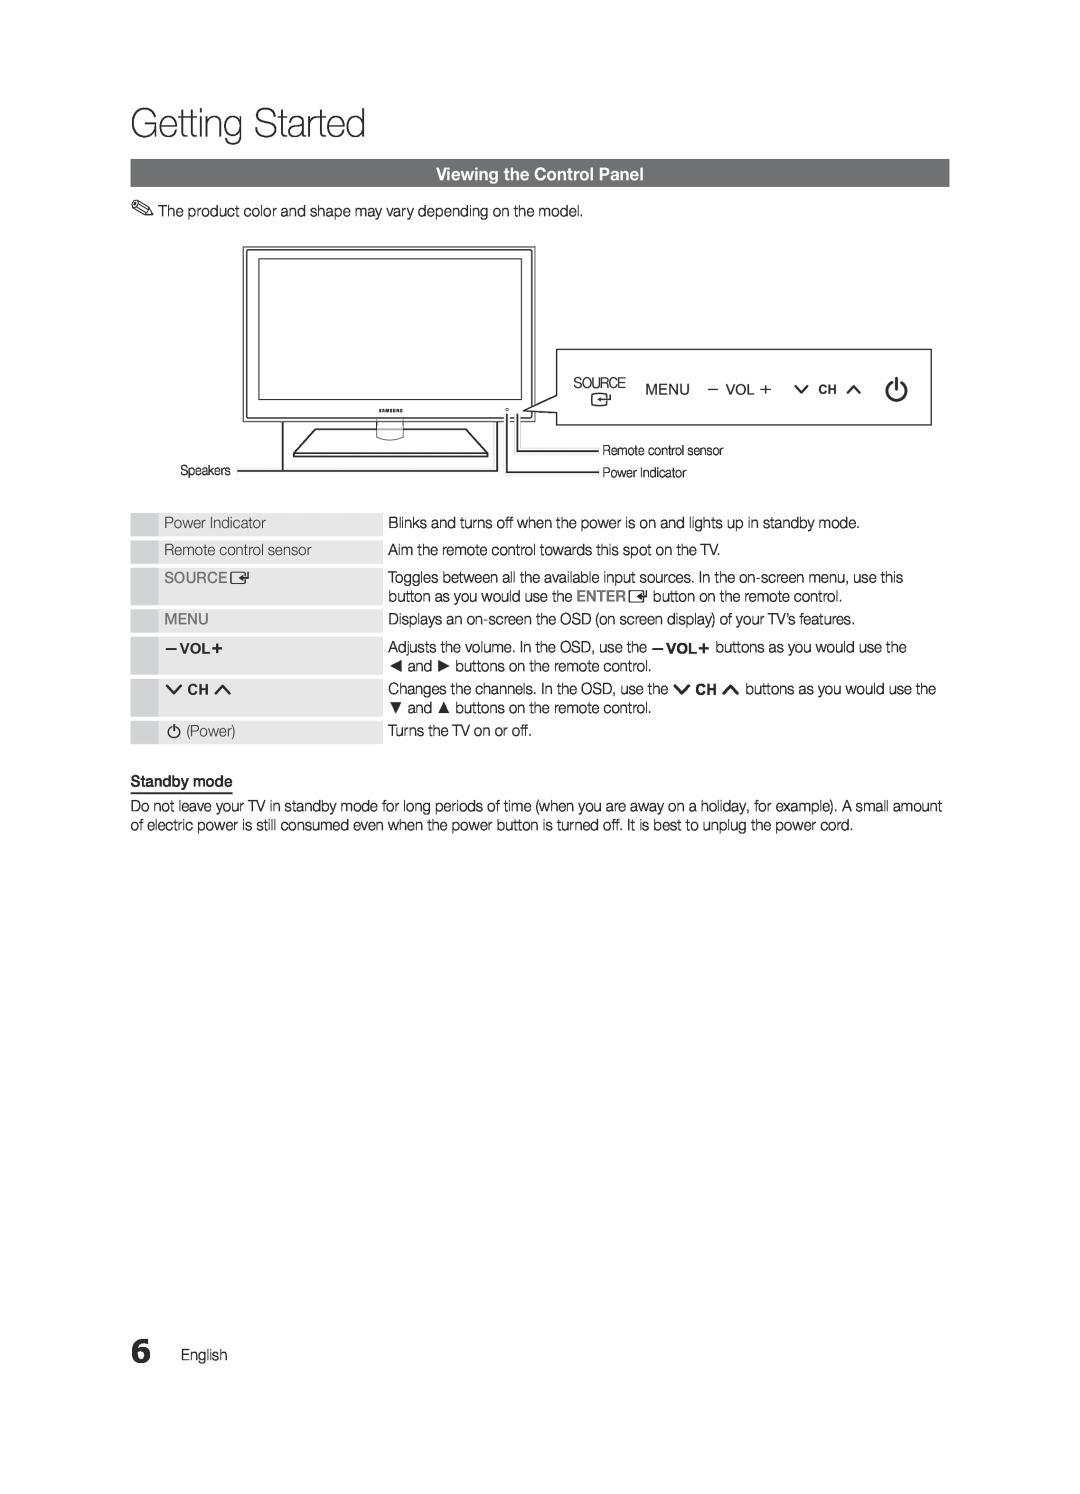 Samsung BN68-03165B-01, UC6300-ZC user manual Viewing the Control Panel, Source E, Menu, Getting Started 